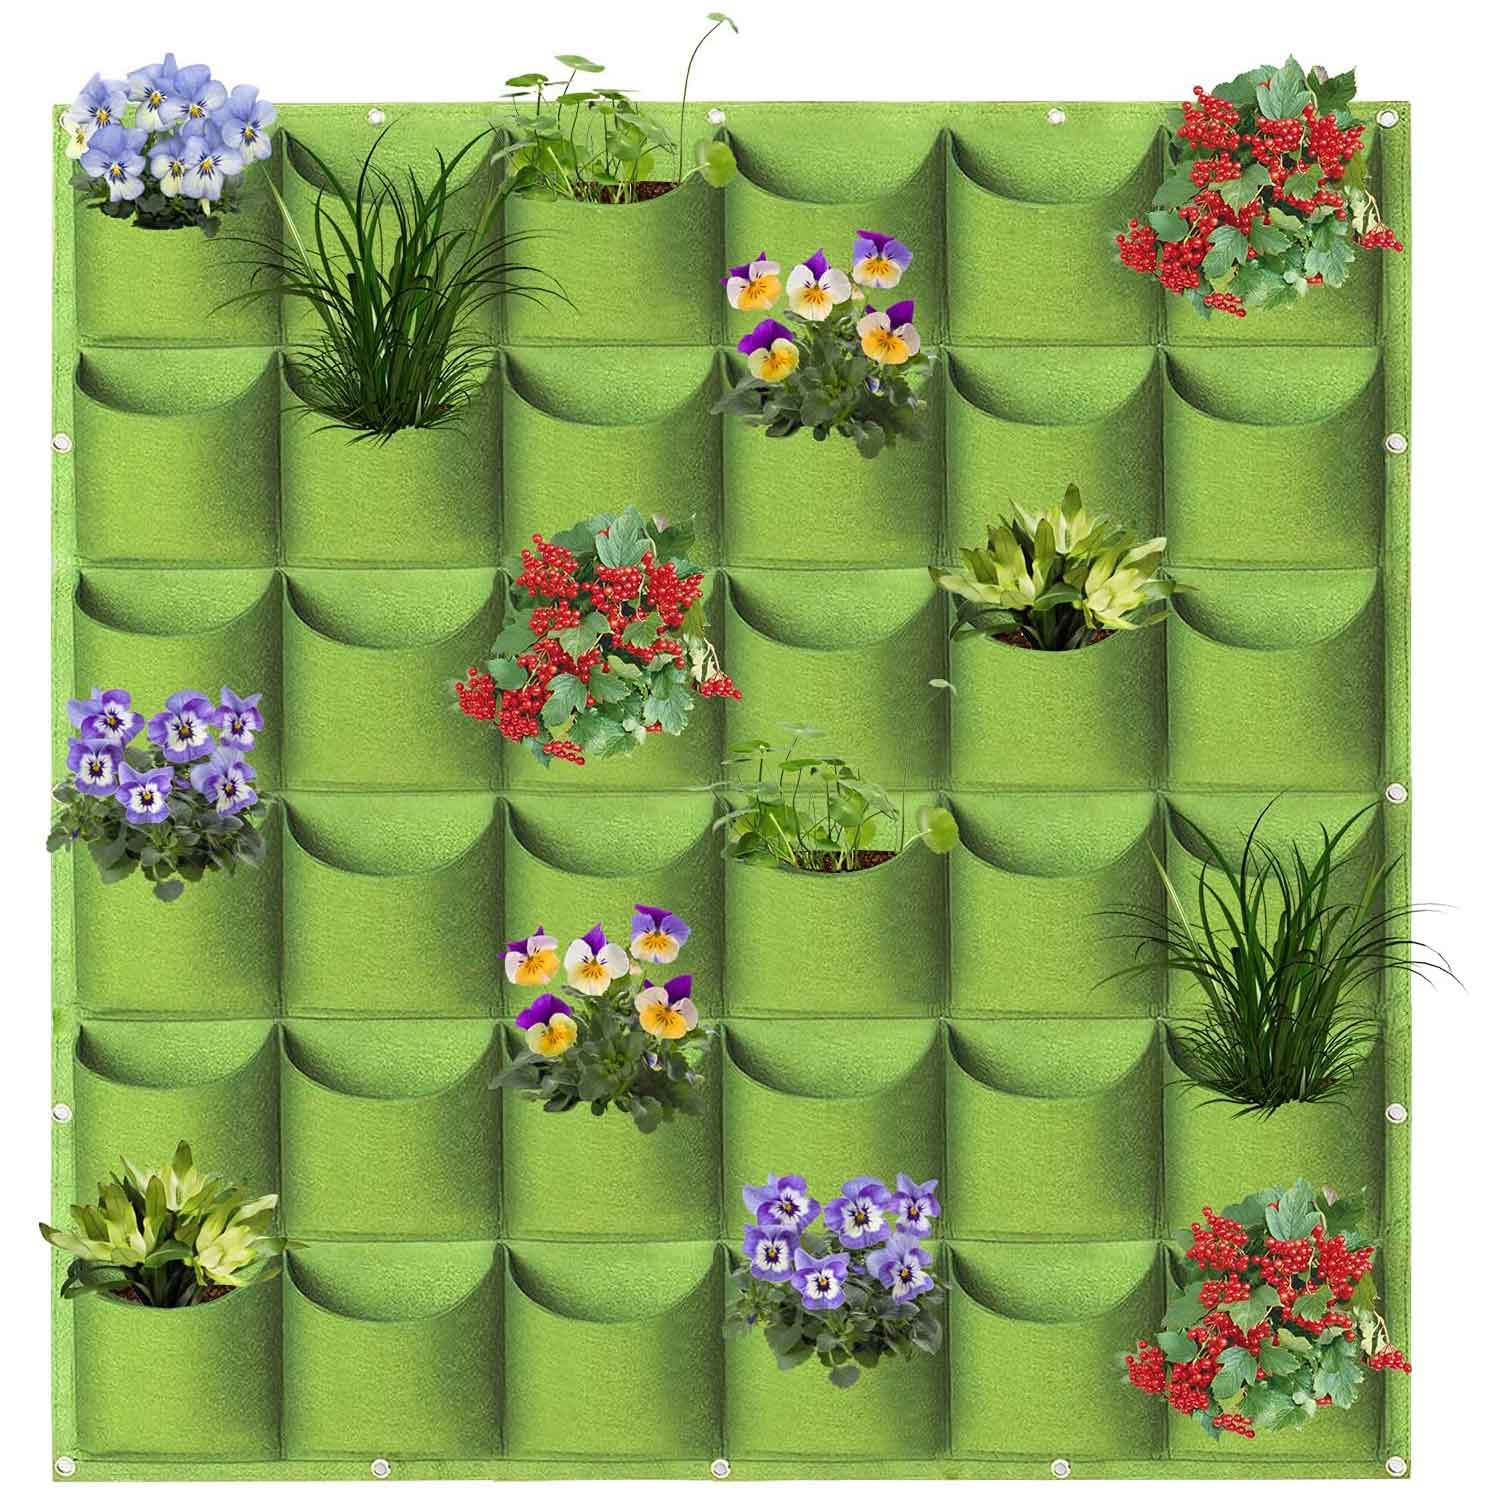 Wall Hanging Planter Planting Grow Bag Vertical Garden Vegetable Flower – Green, 36 Pockets